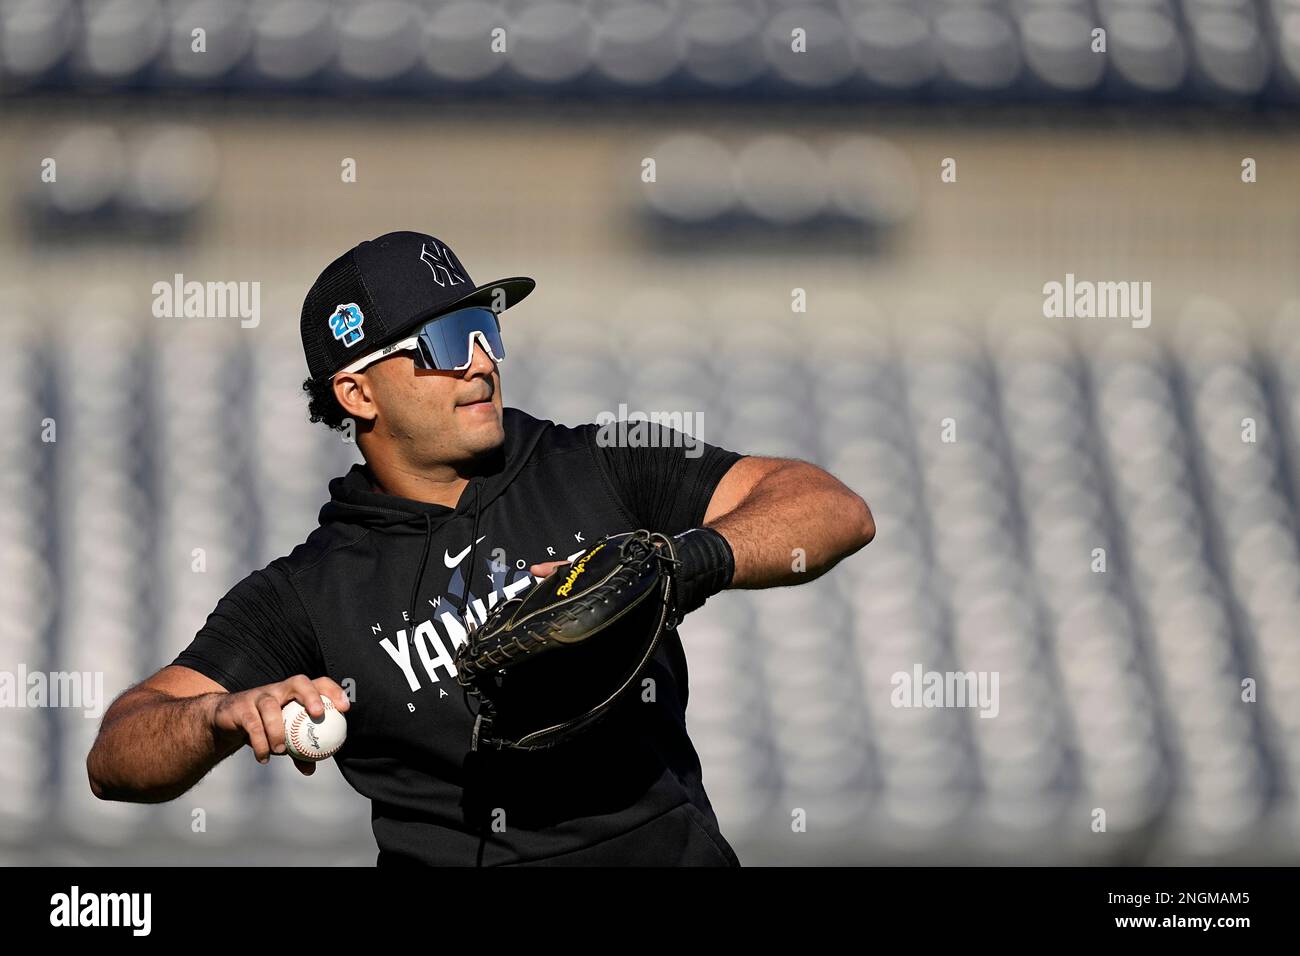 New York Yankees catcher Rodolfo Duran throws during a spring